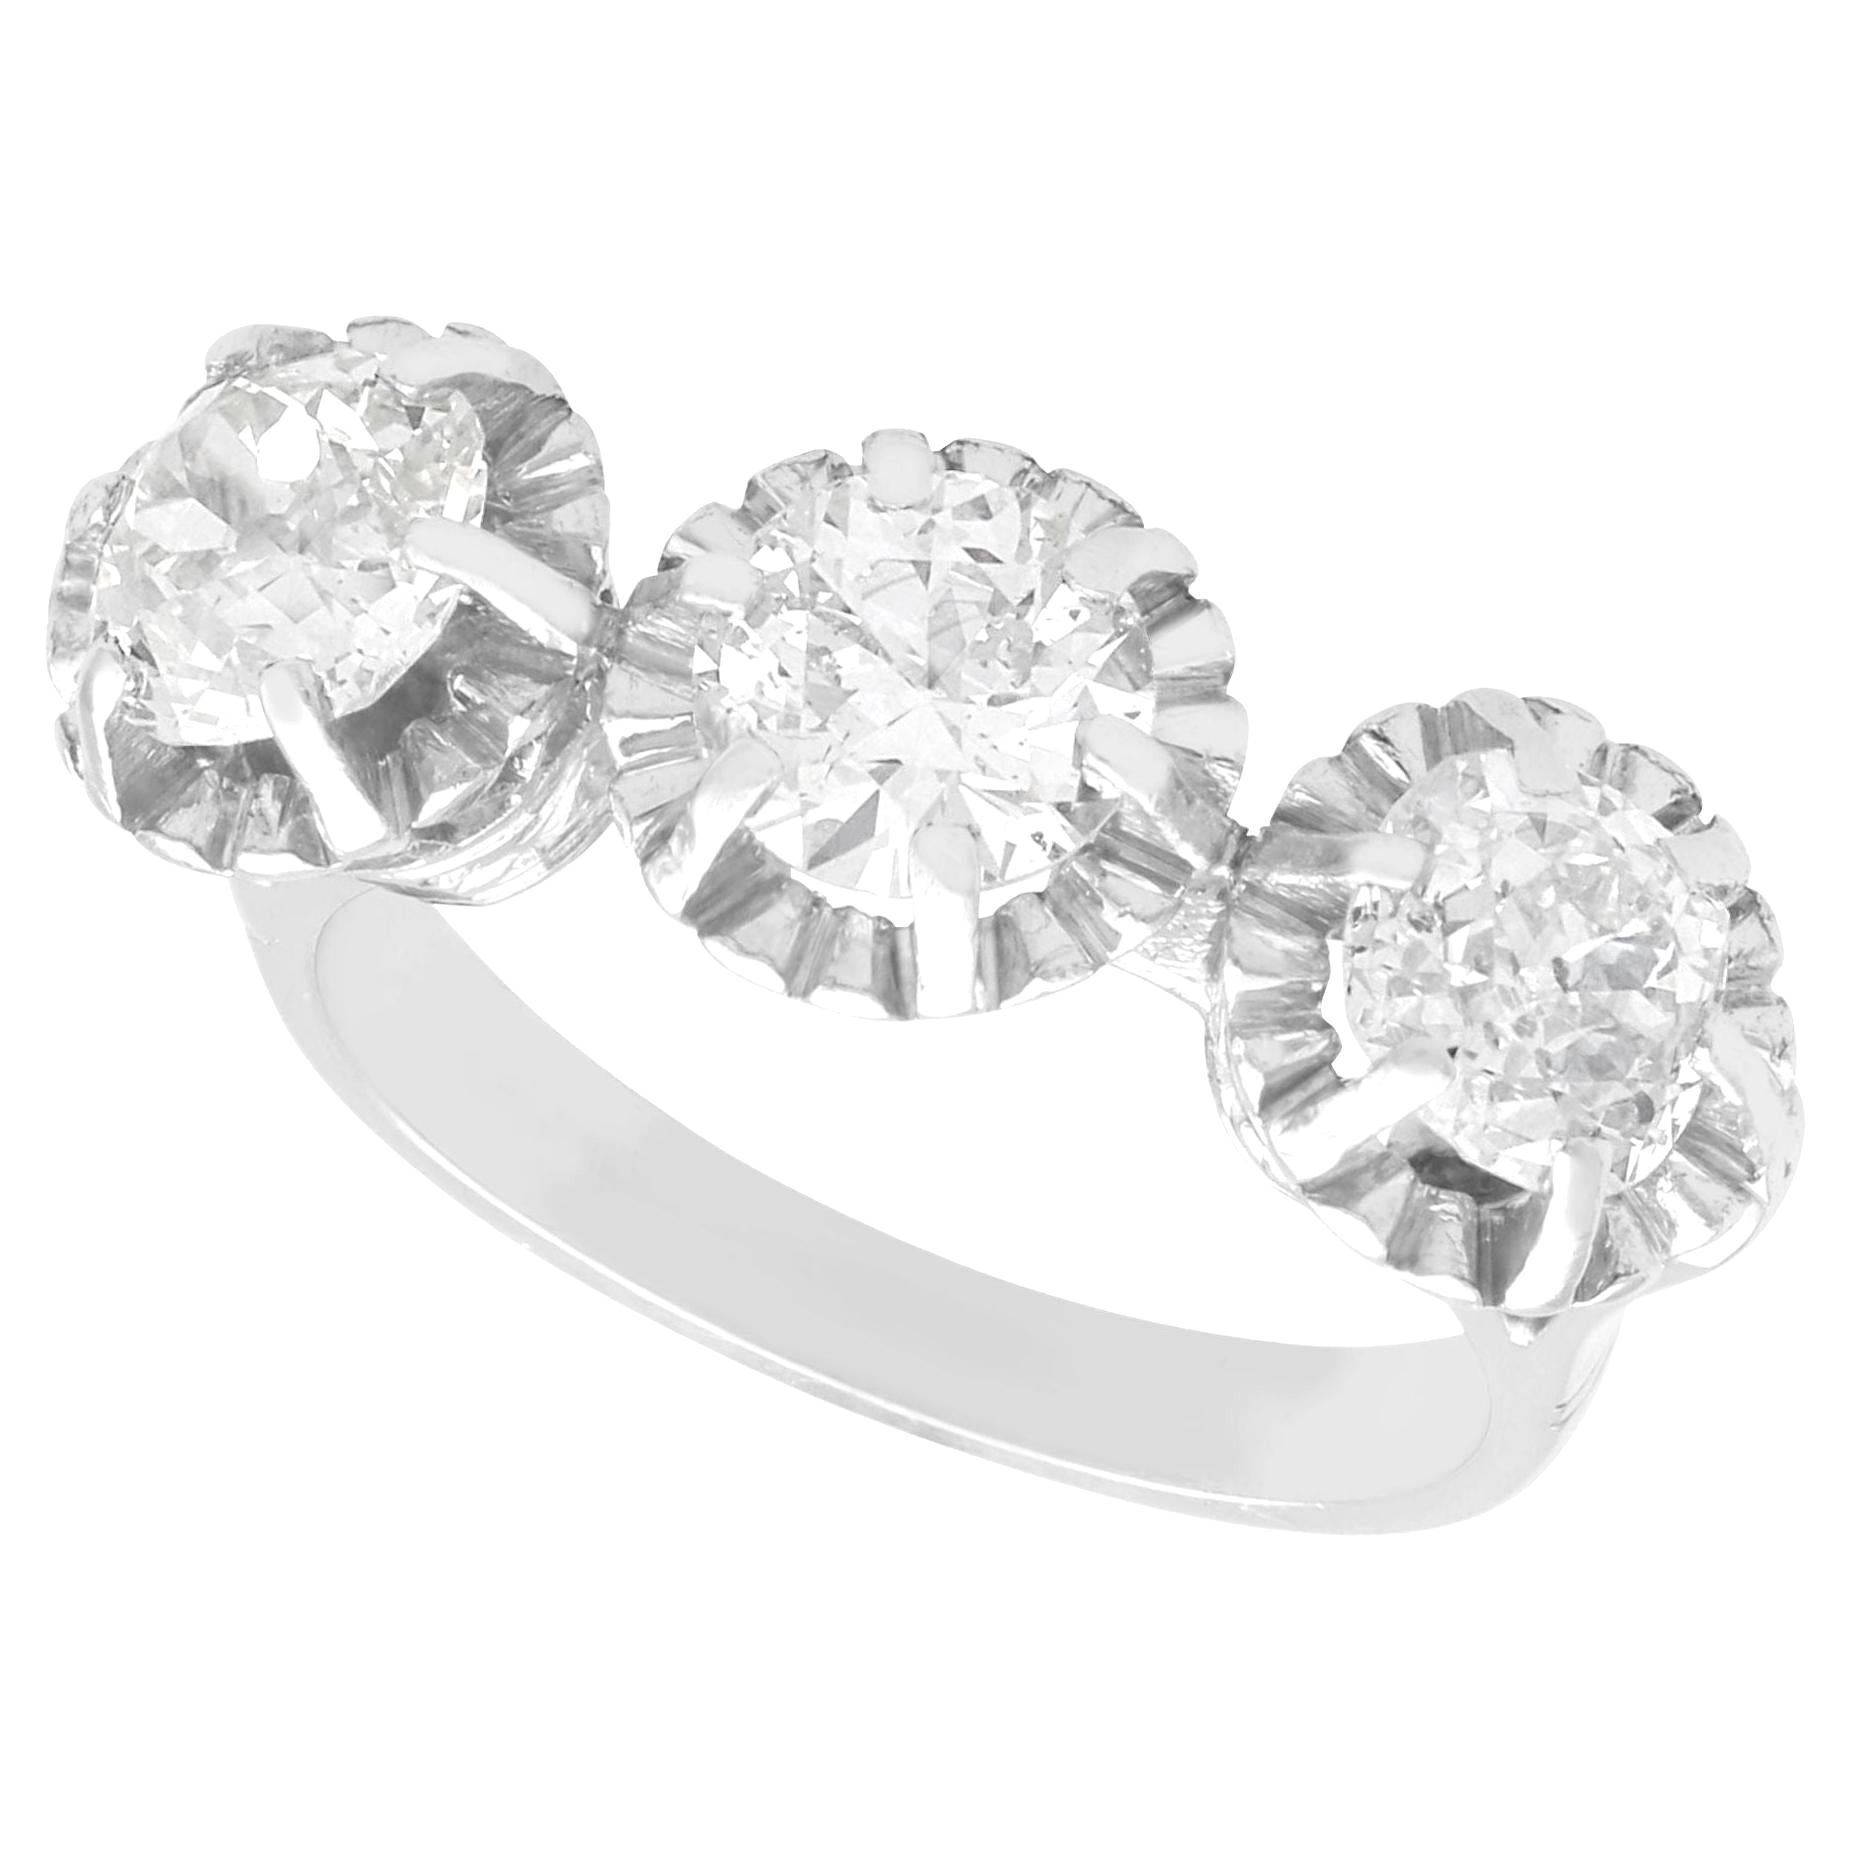 1920s 1.81 Carat Diamond Trilogy Ring in Palladium